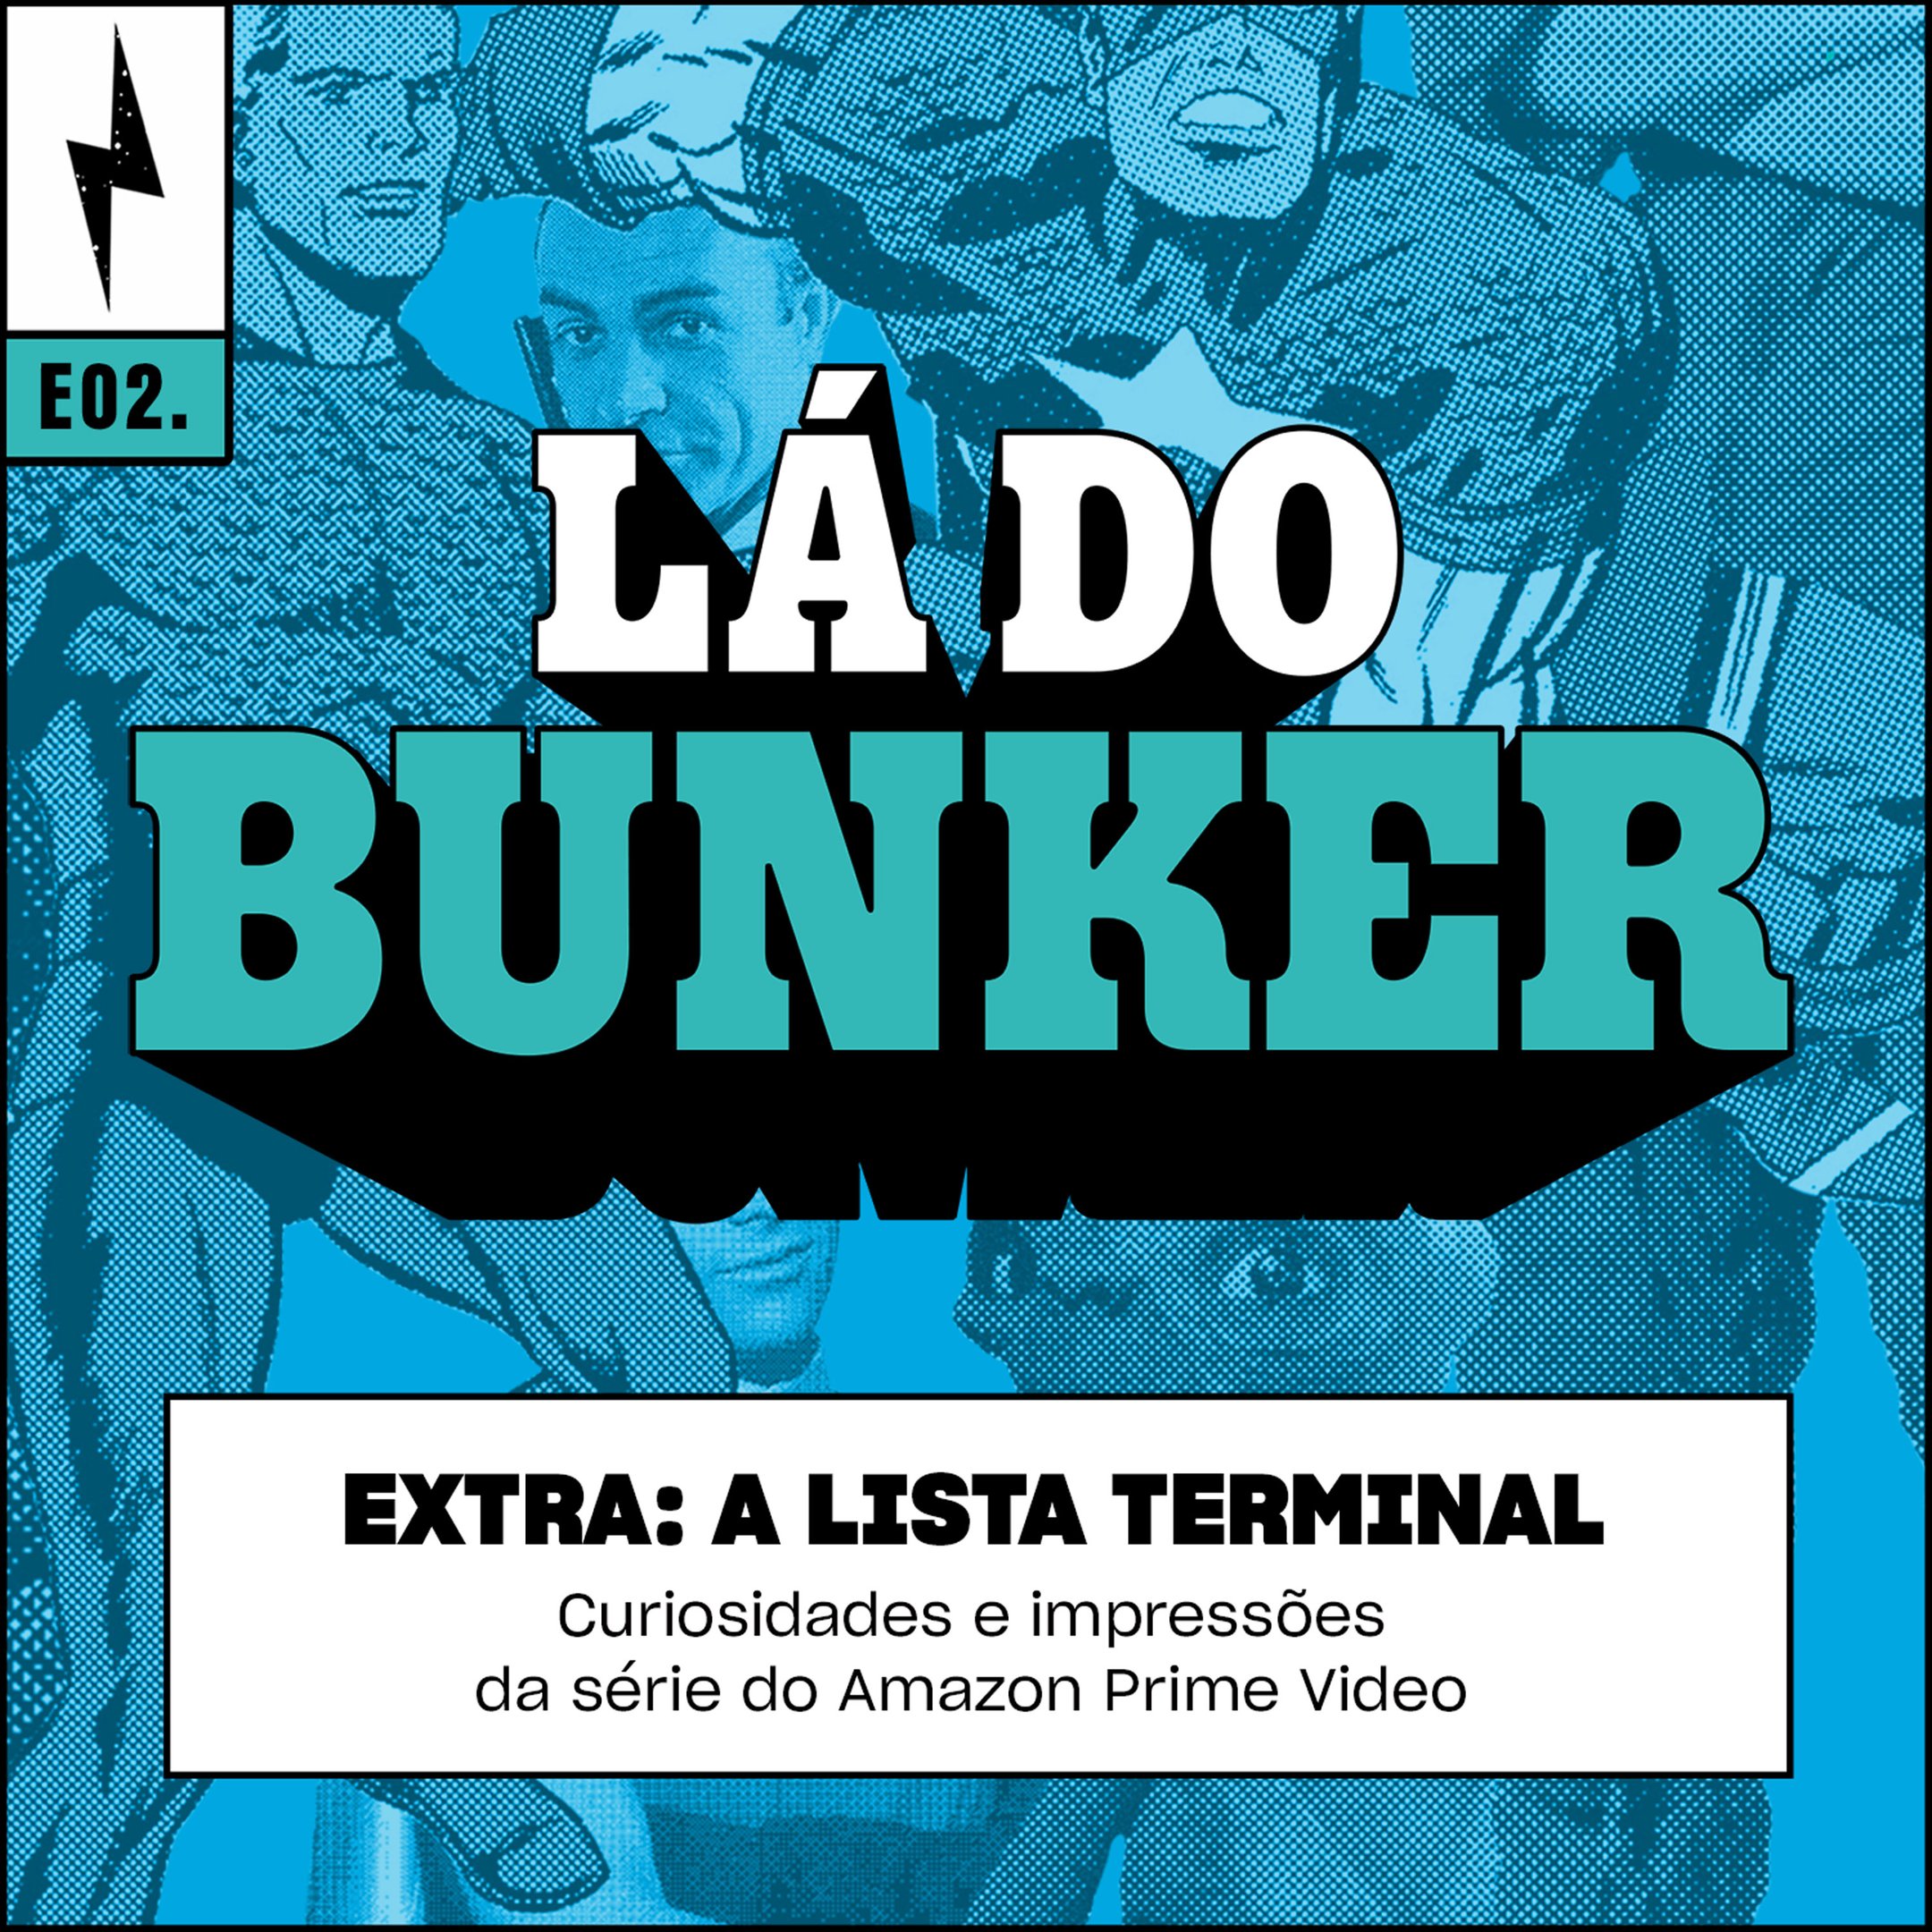 Lá do Bunker Oferecido por Amazon Prime Video - Extra: A Lista Terminal